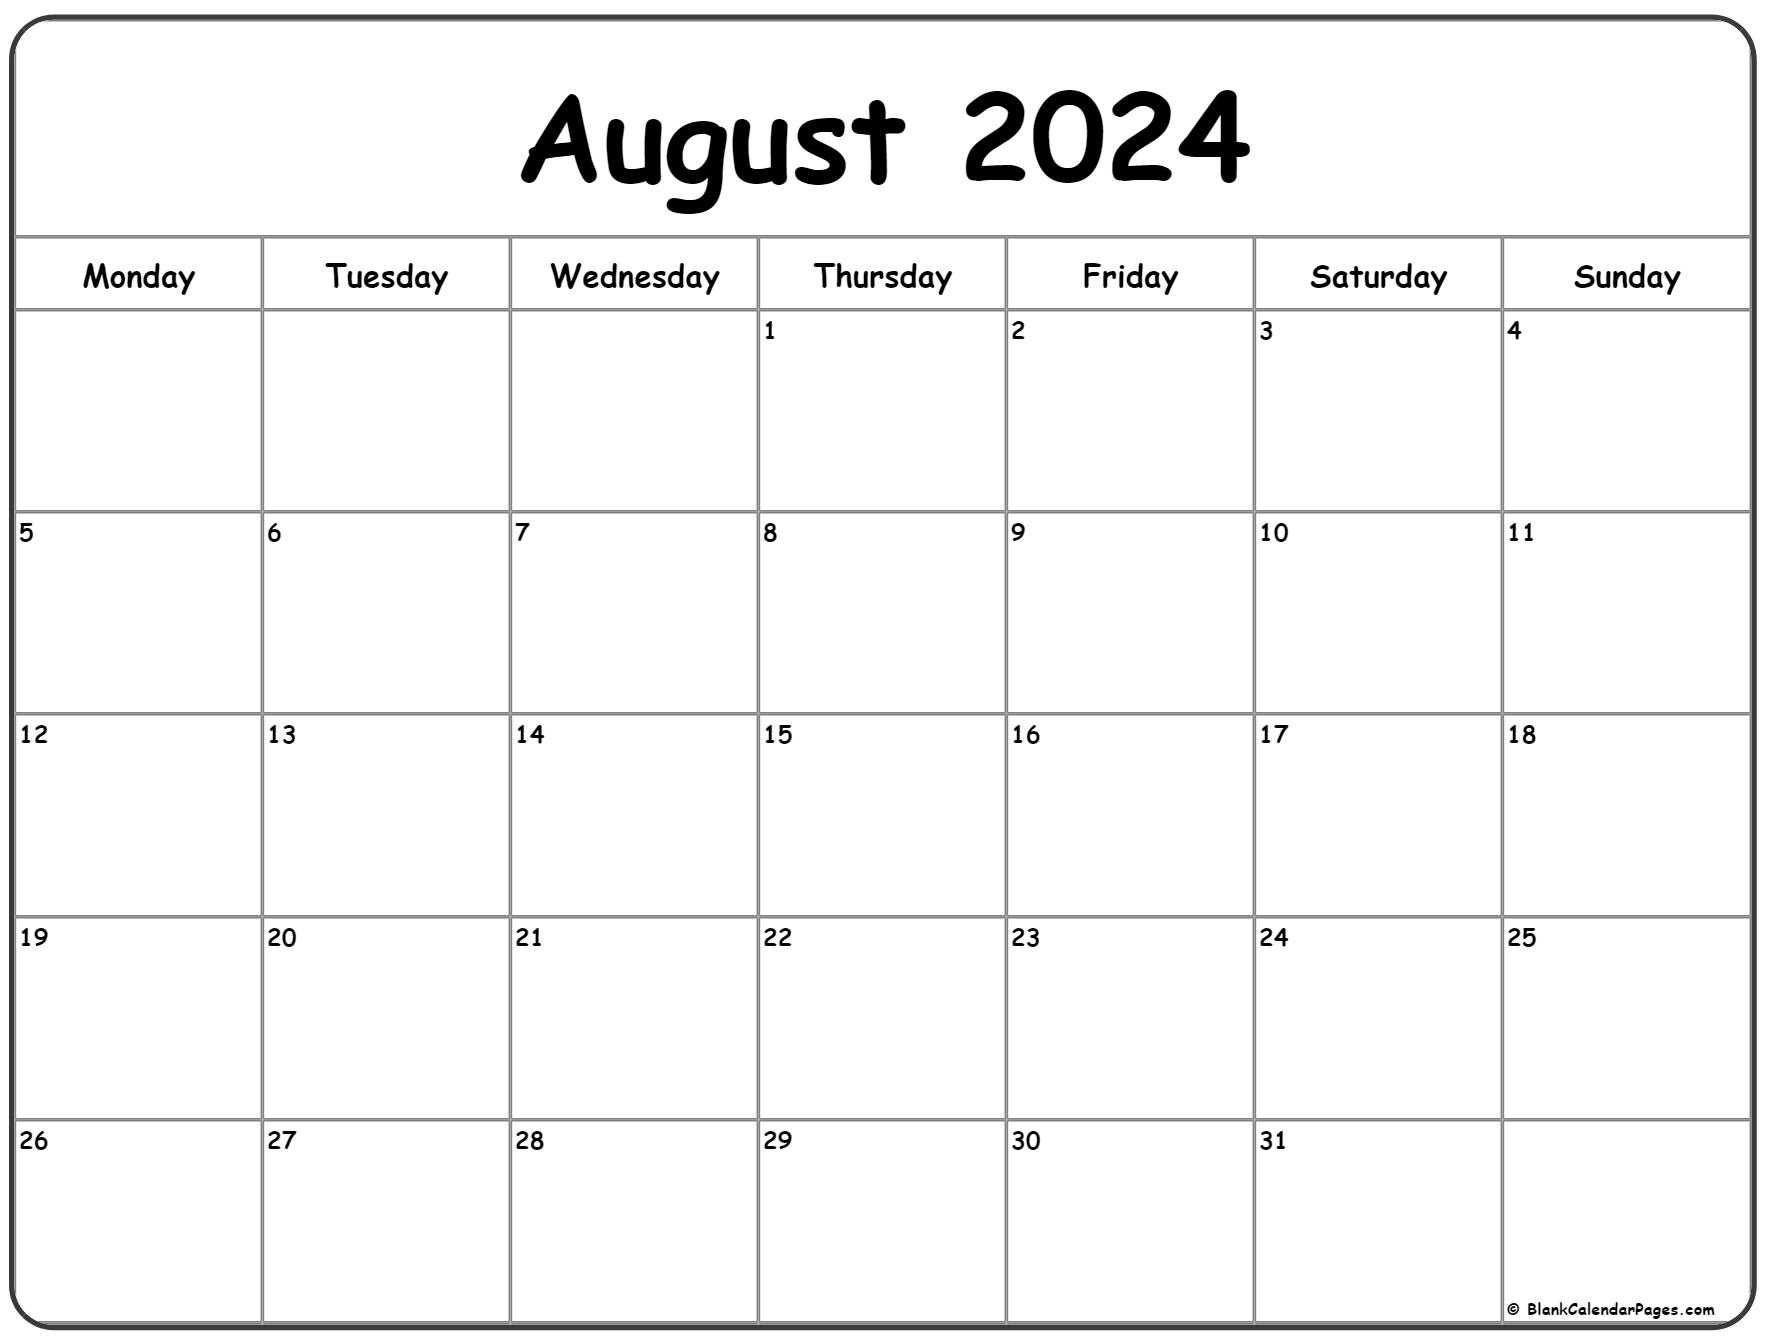 August 2024 Monday Calendar | Monday To Sunday for August Printable Calendar 2024